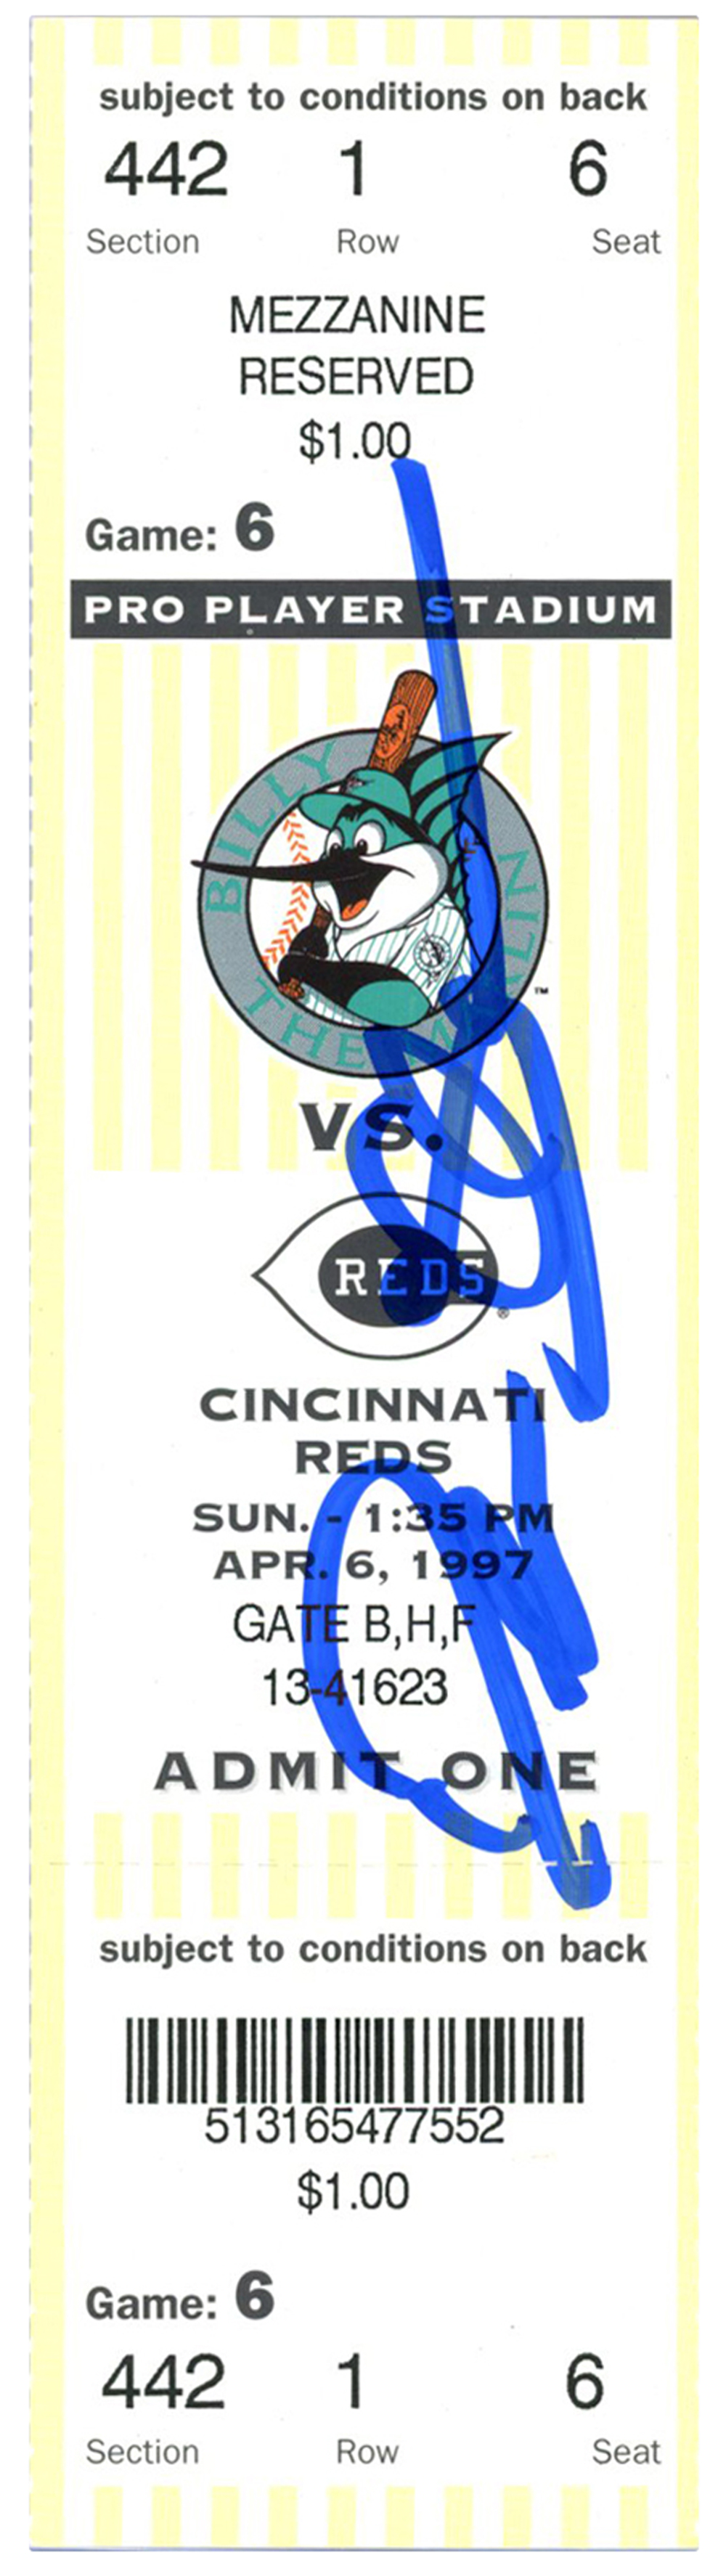 Deion Sanders Signed Cincinnati Reds 4/6/1997 @ Marlins Ticket BAS